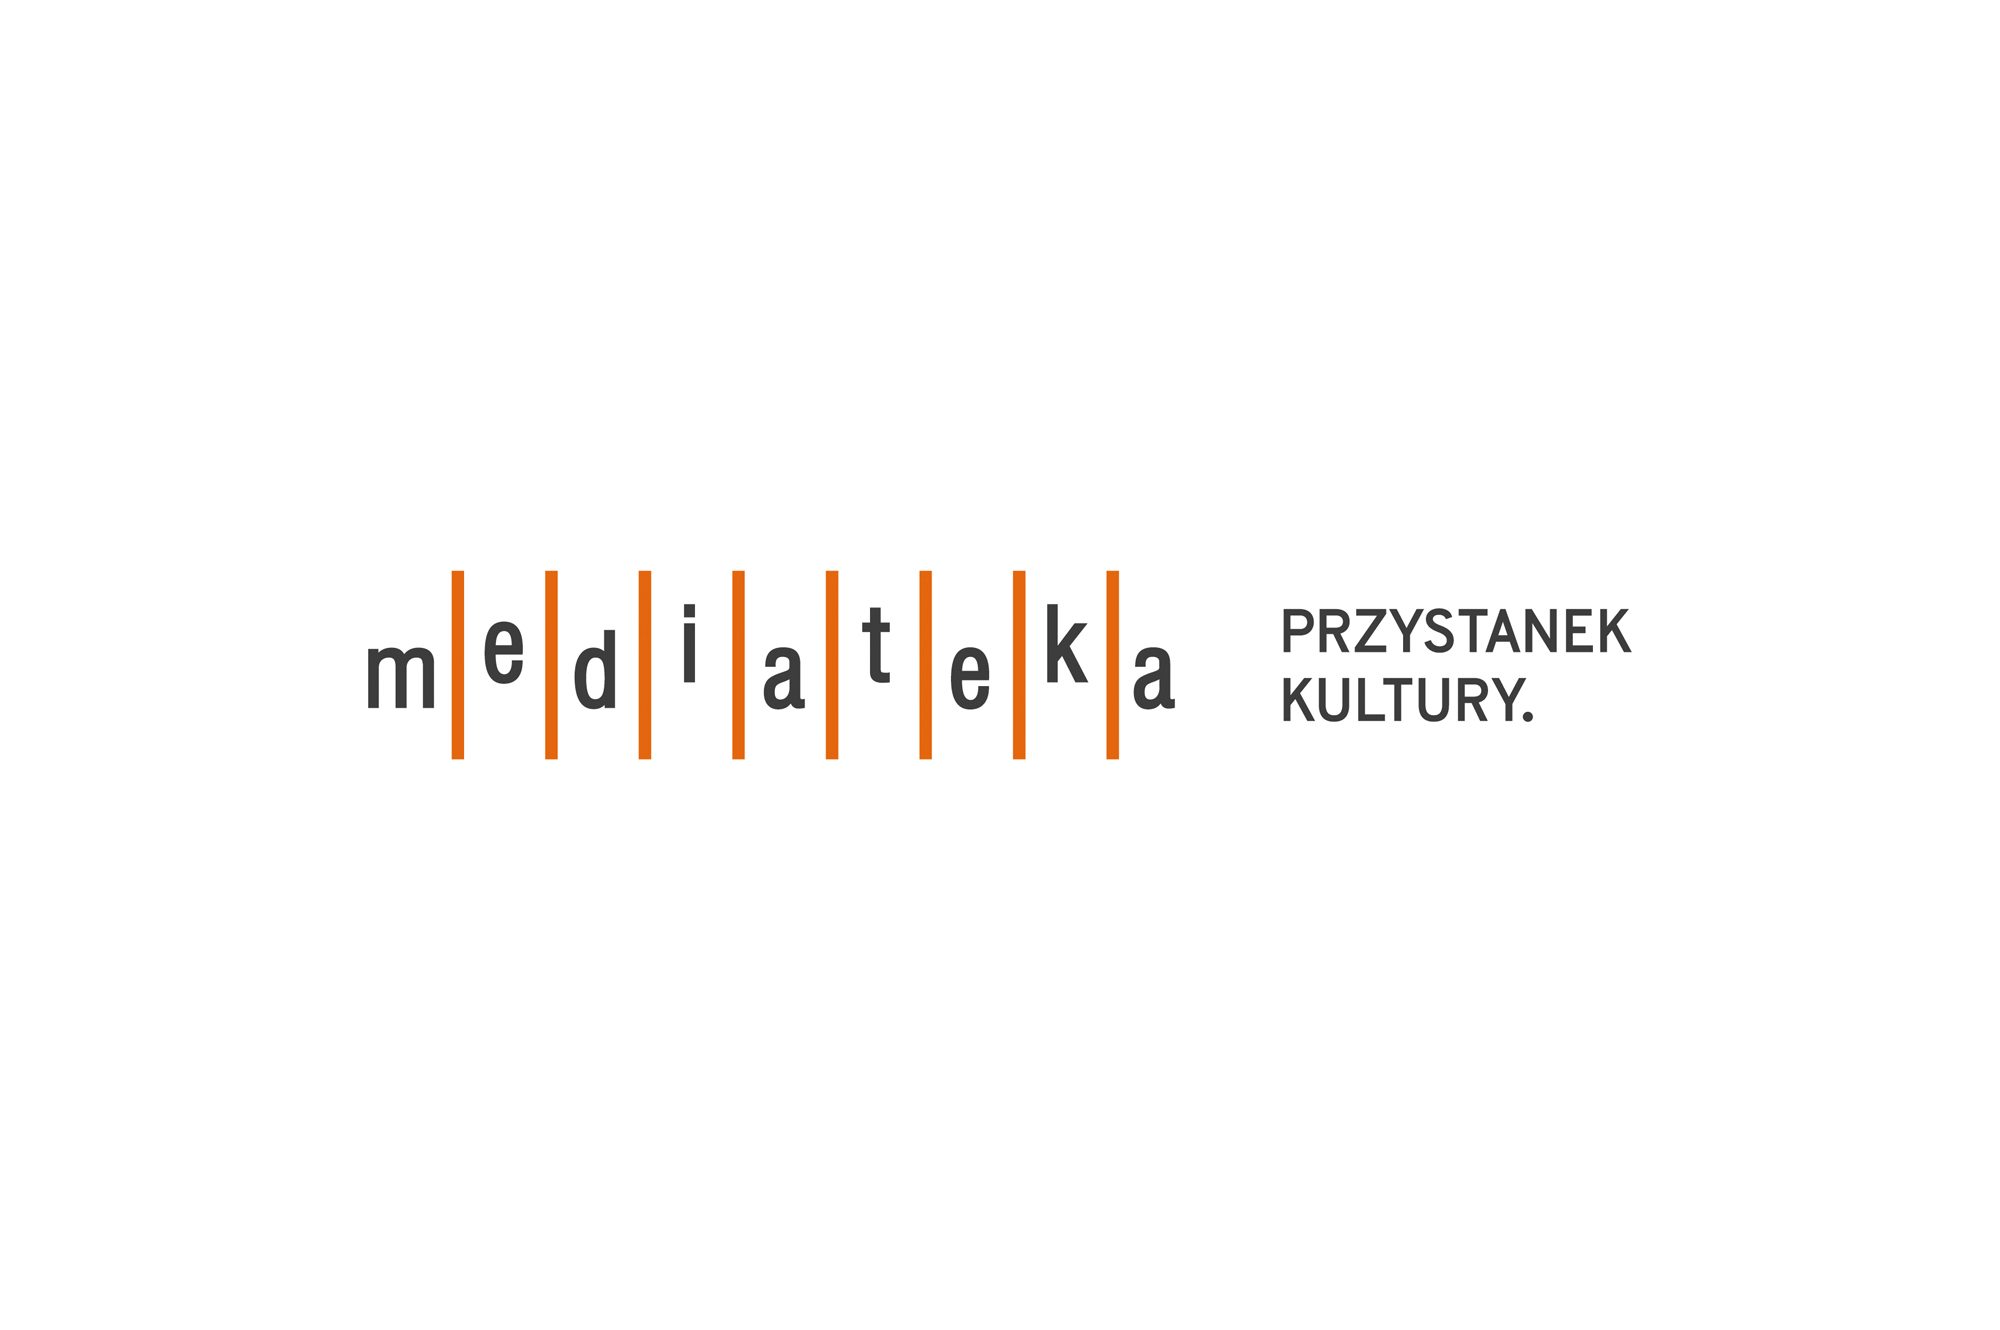 Mediateka Przystanek kultury. - logo POZIOM